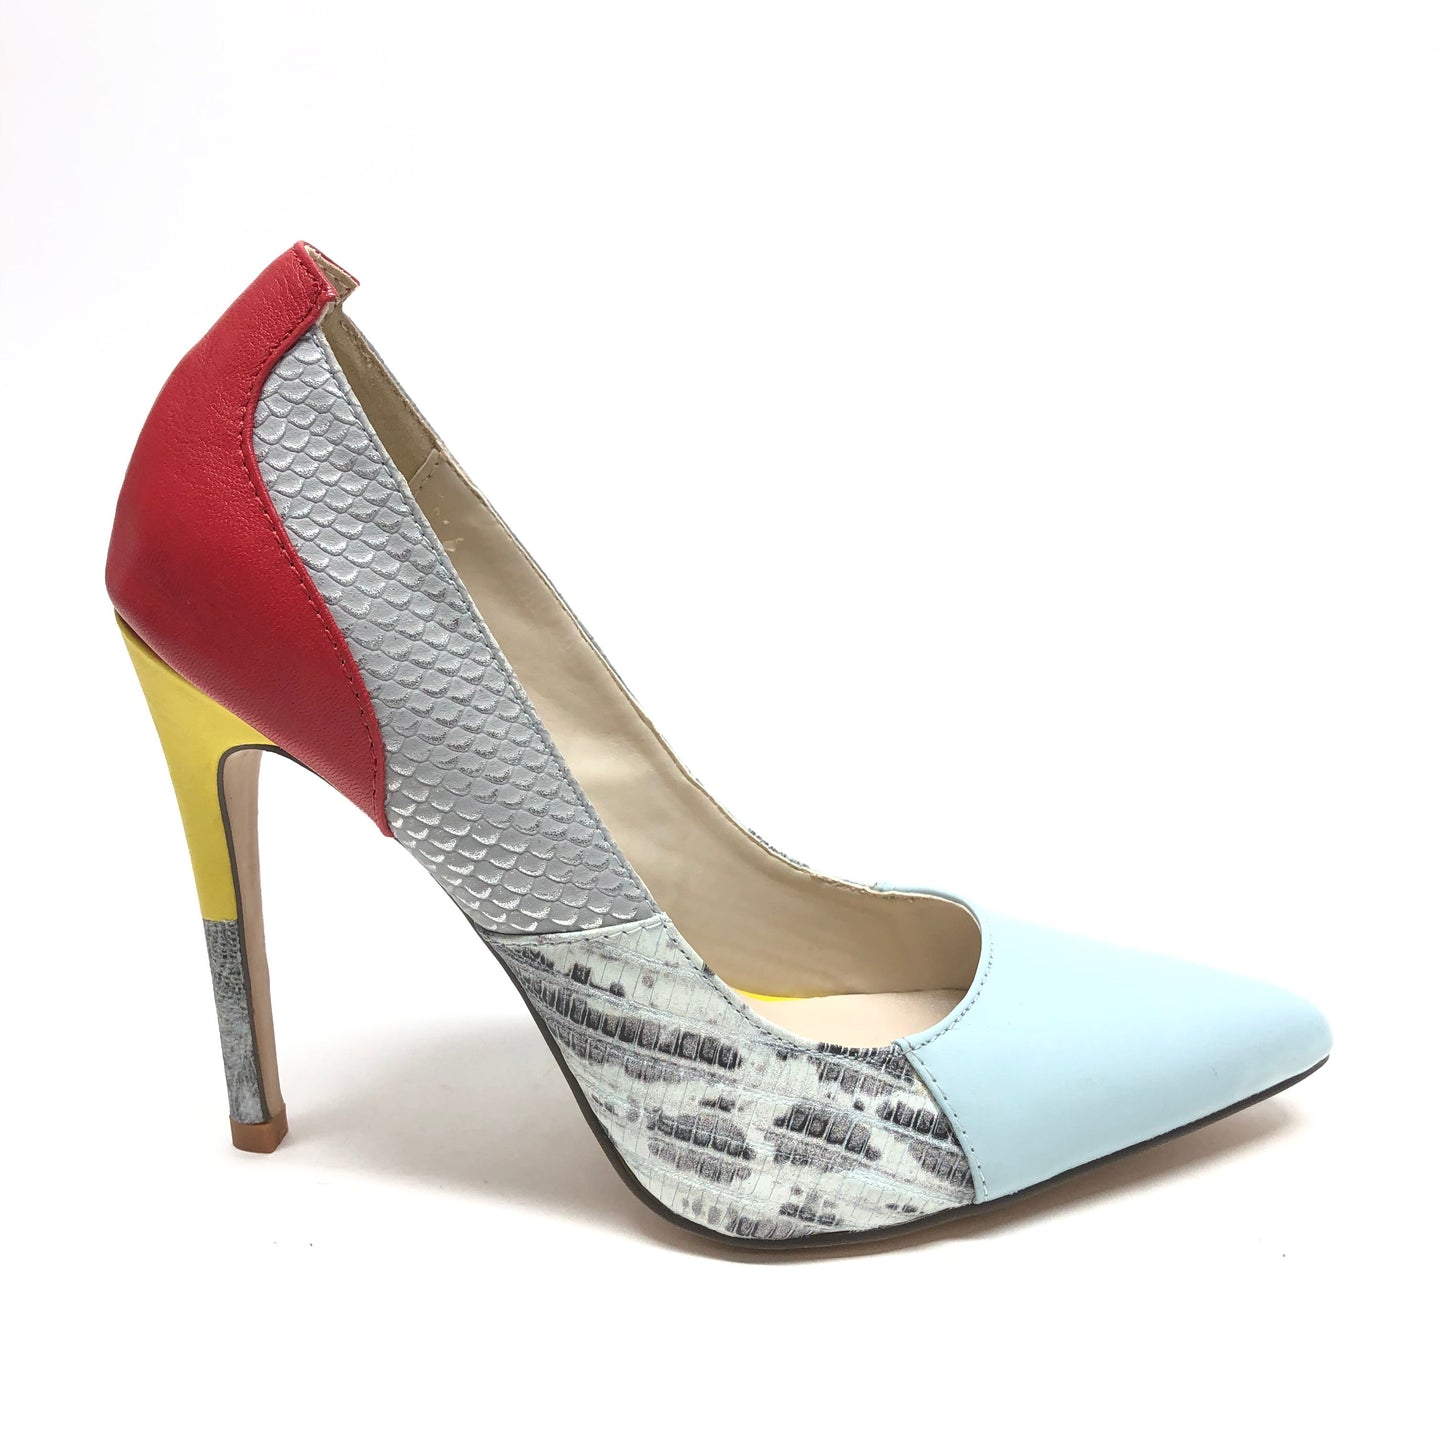 Blue & Red Shoes Heels Stiletto Aldo, Size 6